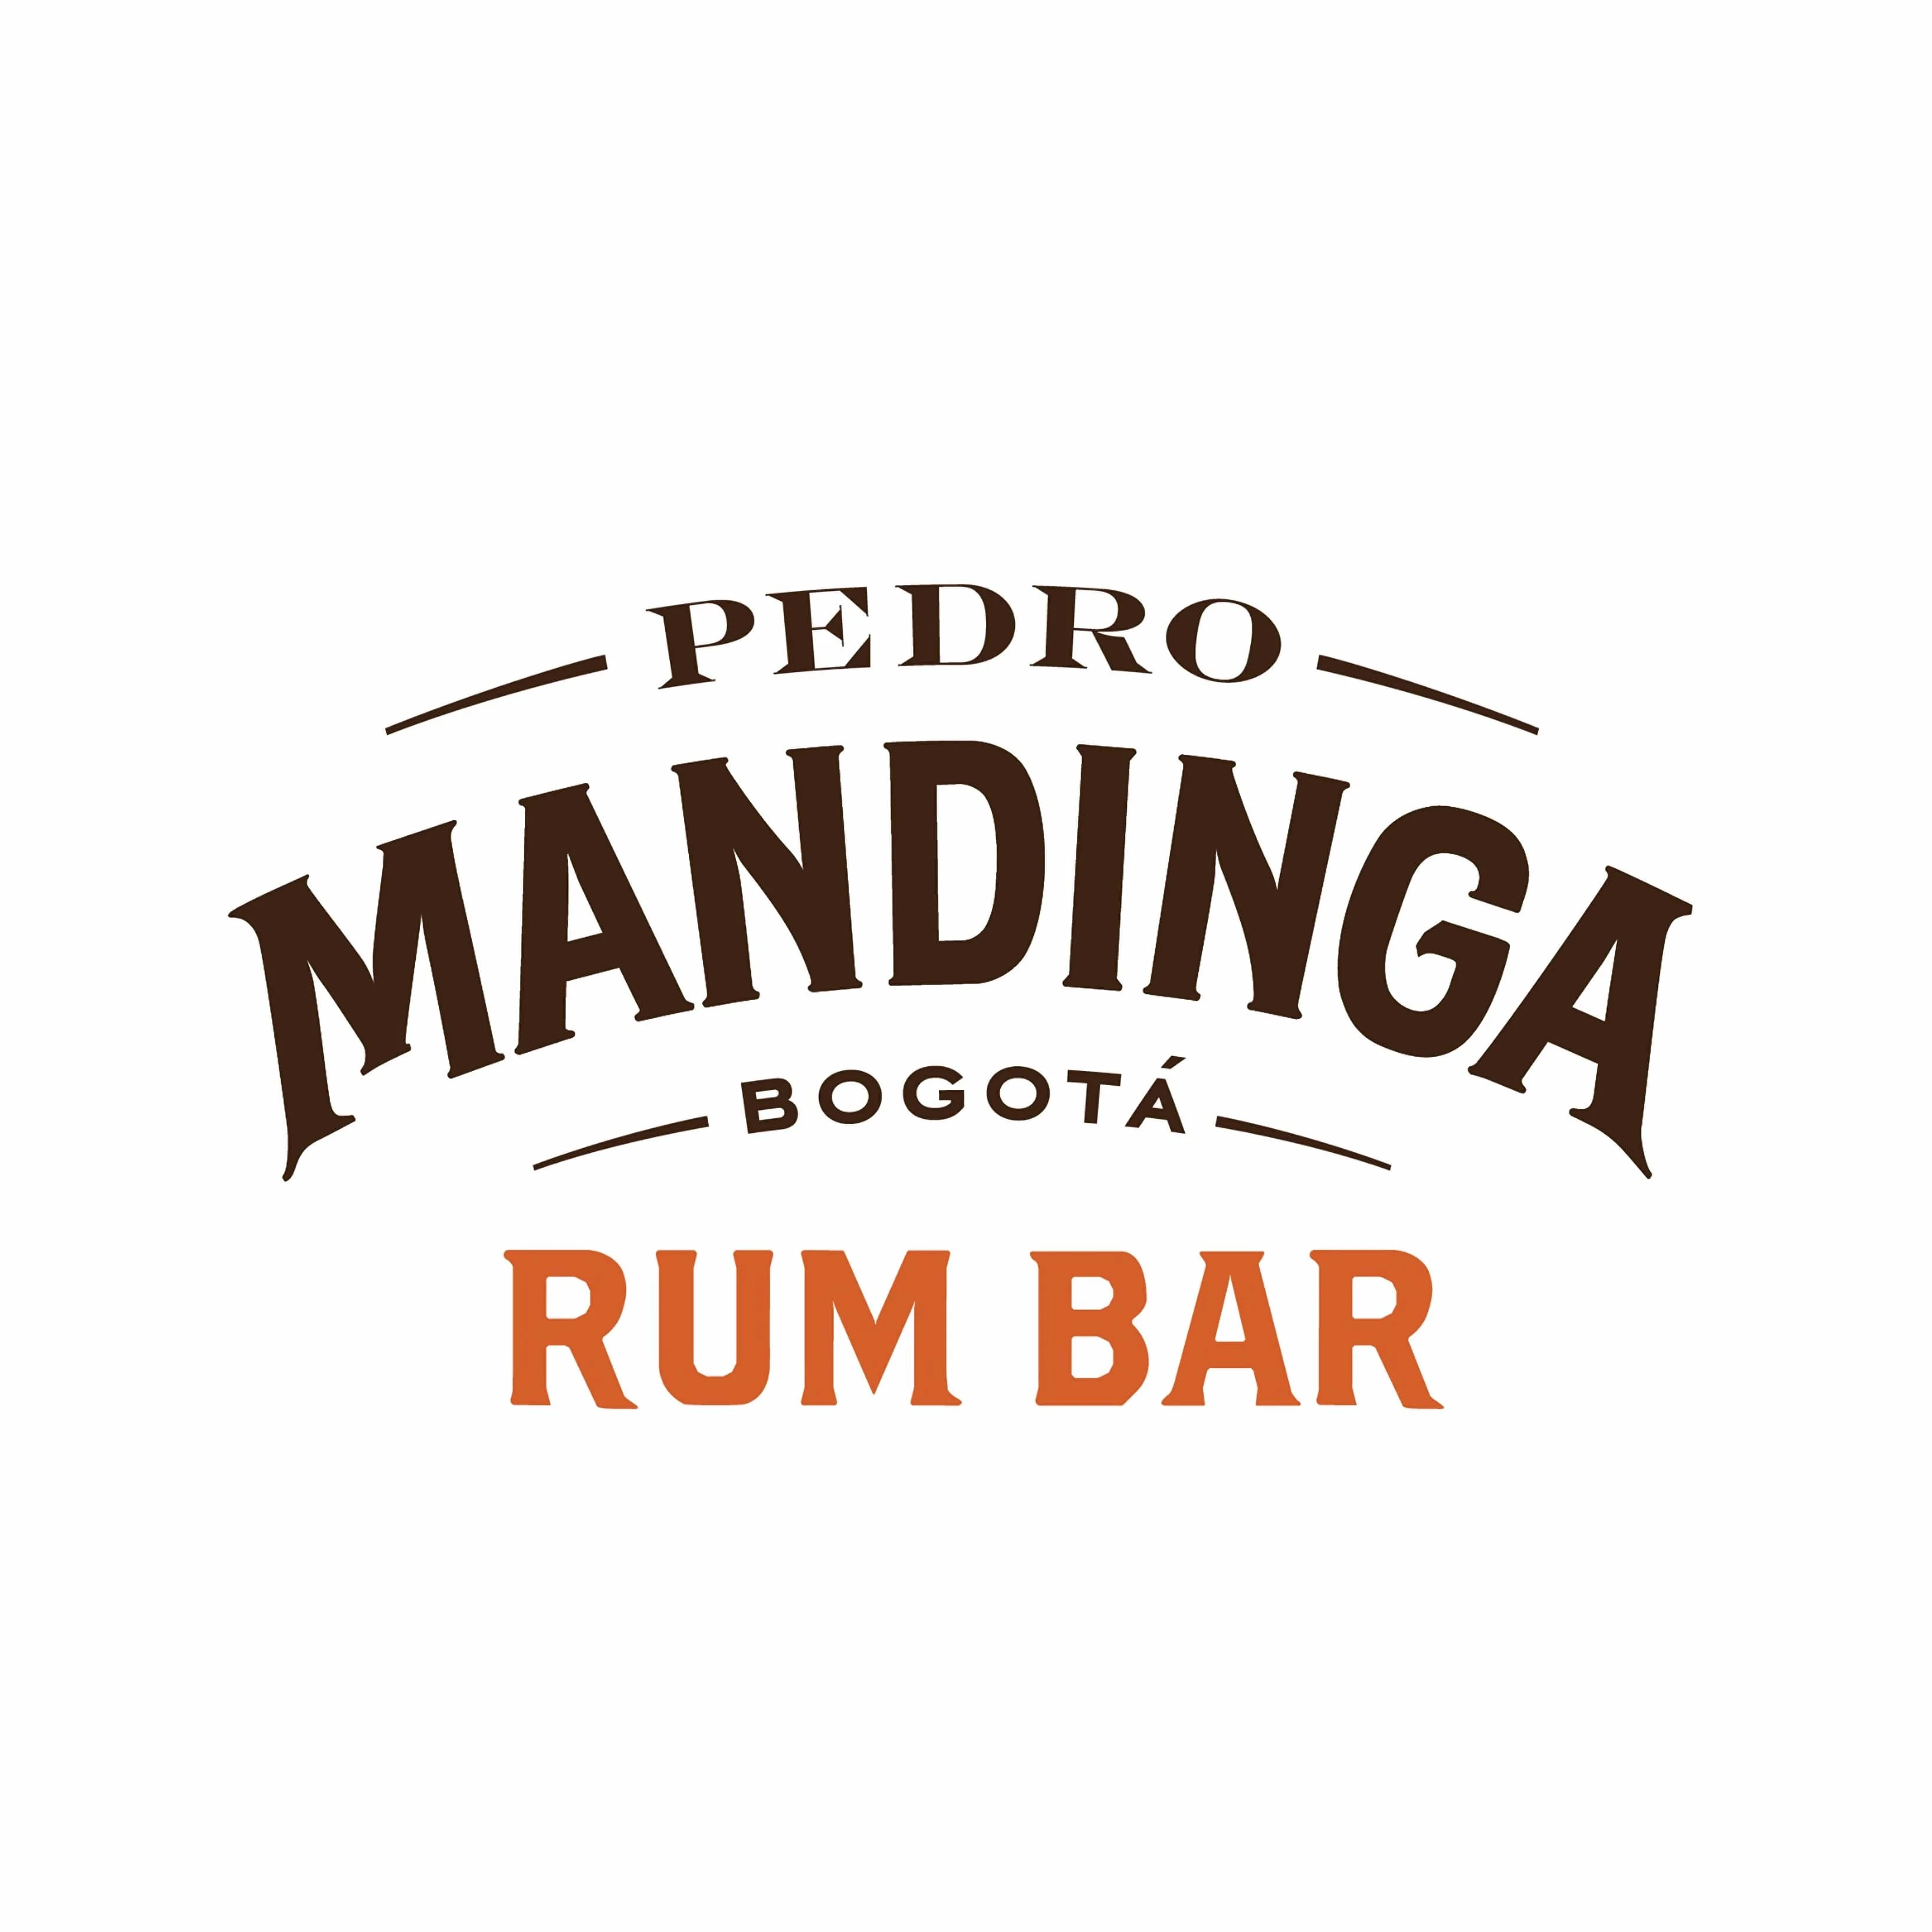 Pedro Mandinga Rum Bar Bogotá-9367